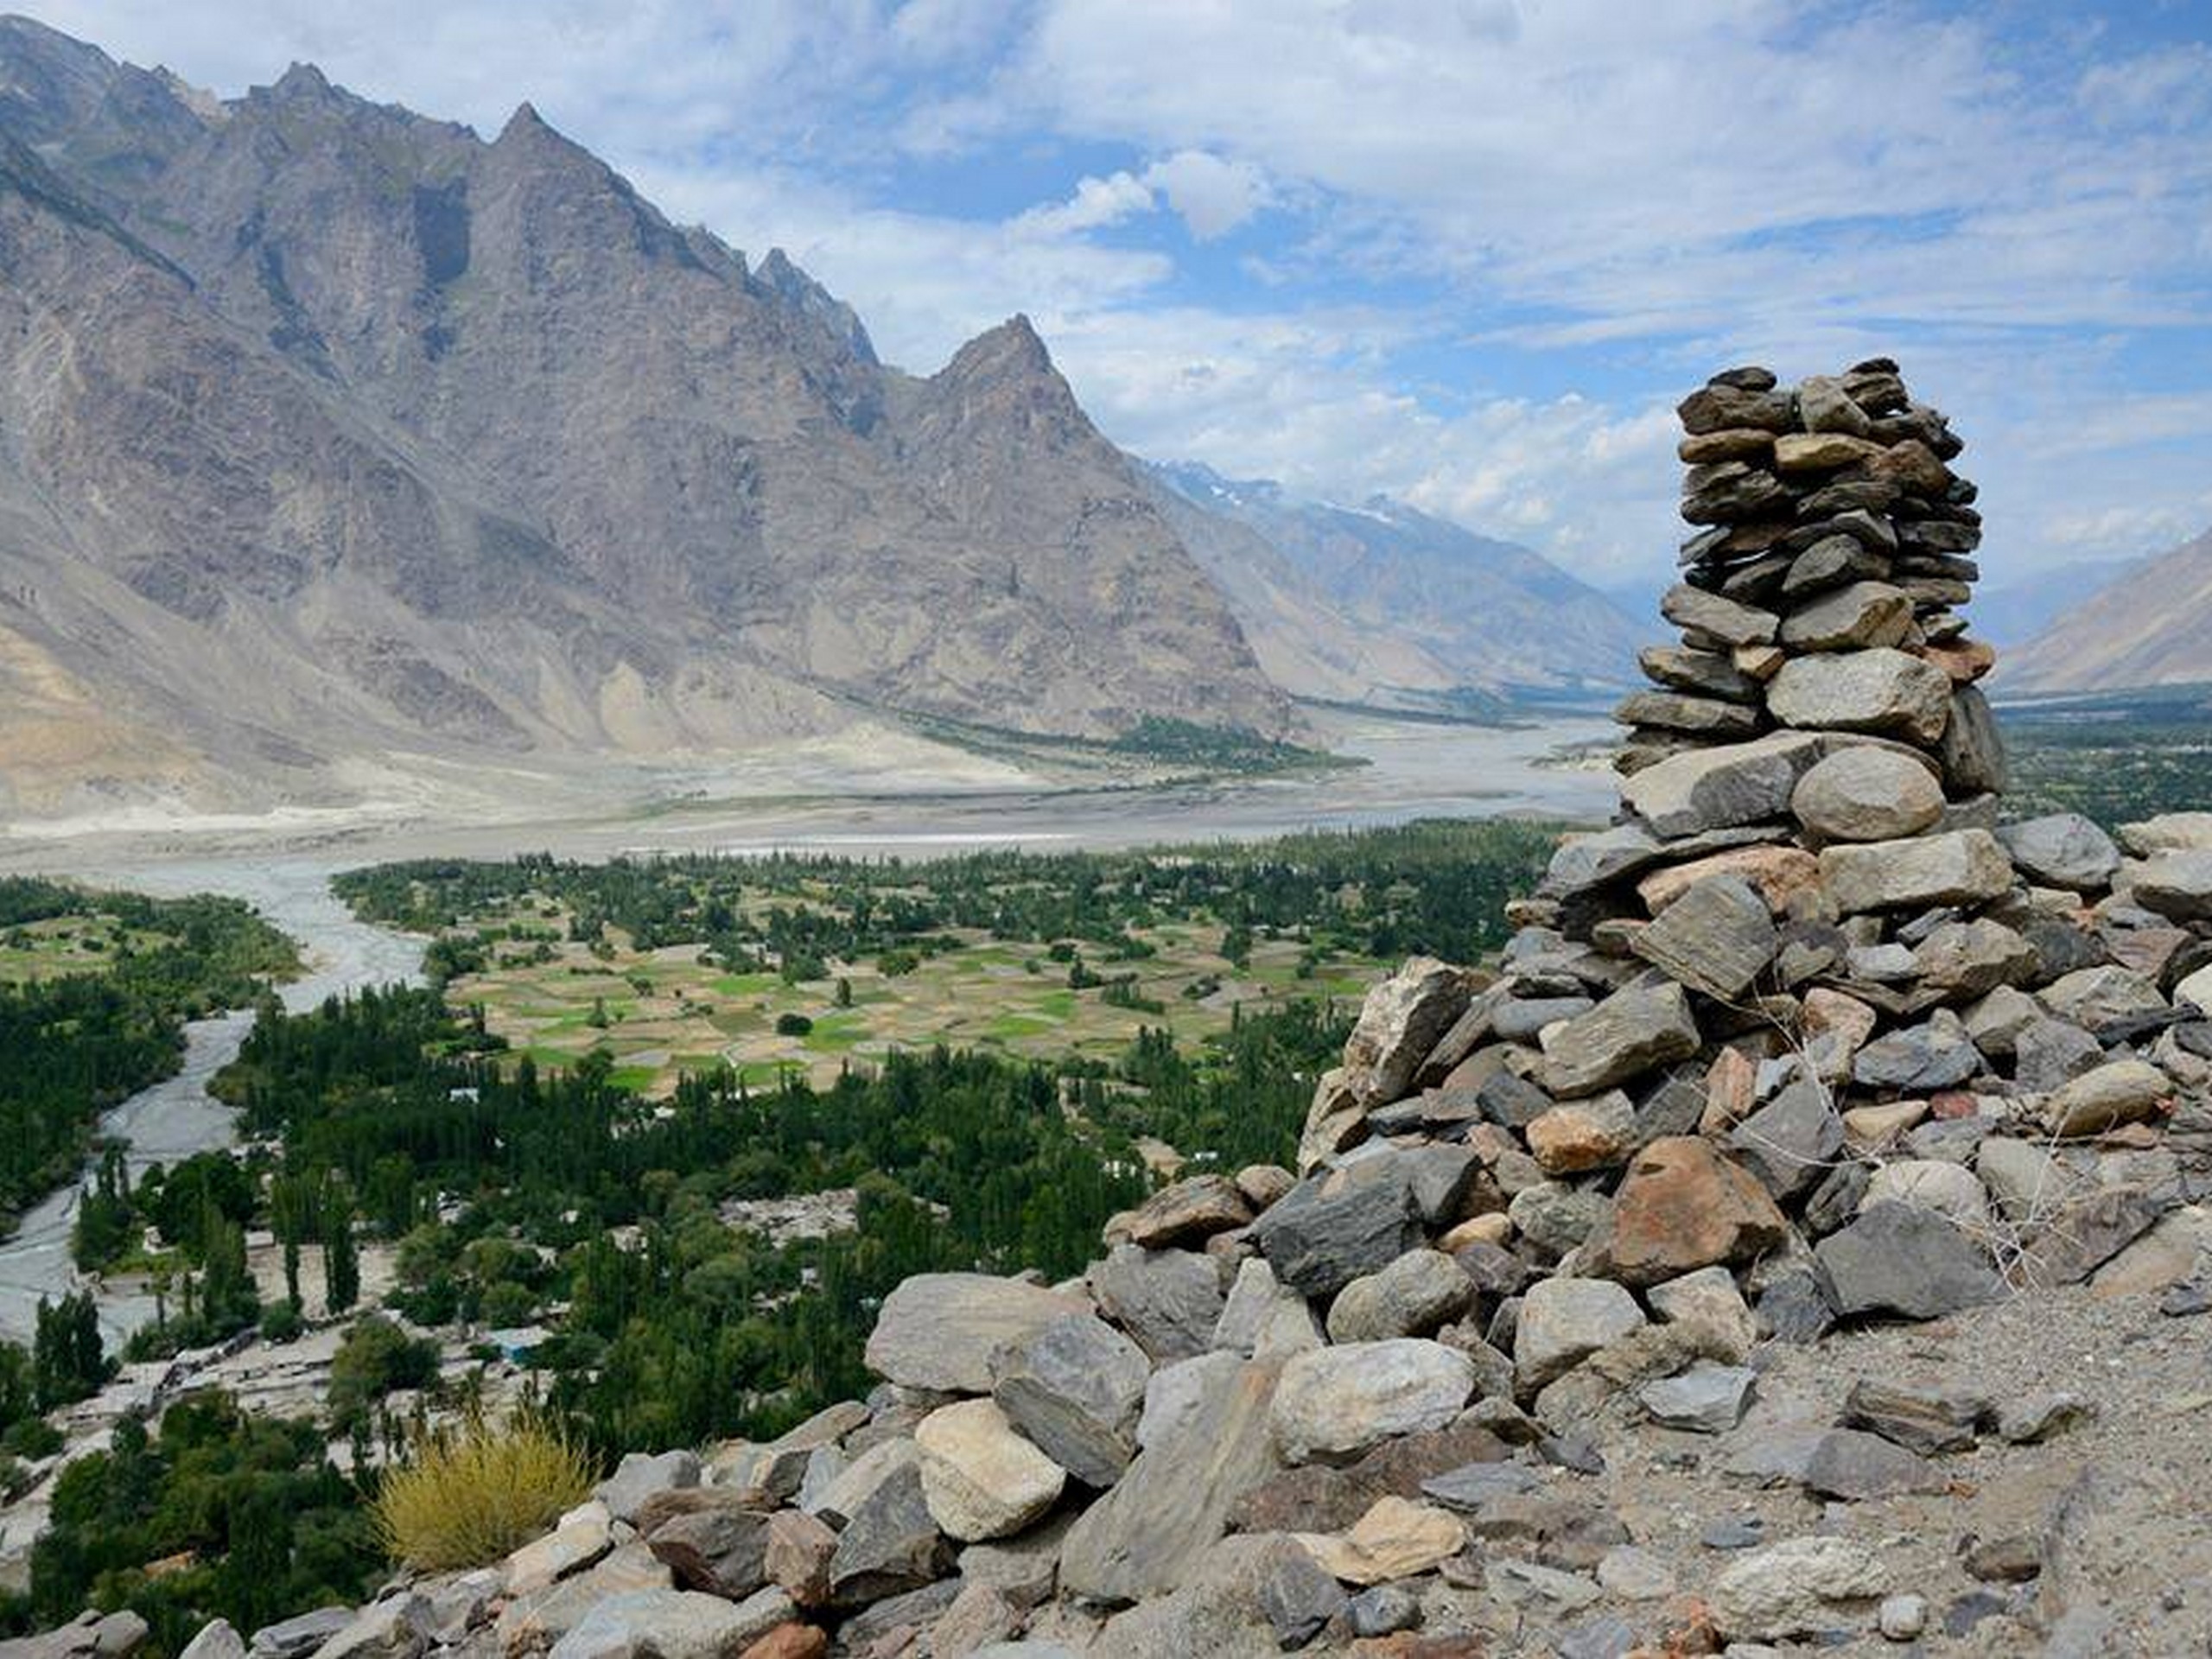 Trekkers exploring the Shigar Valley